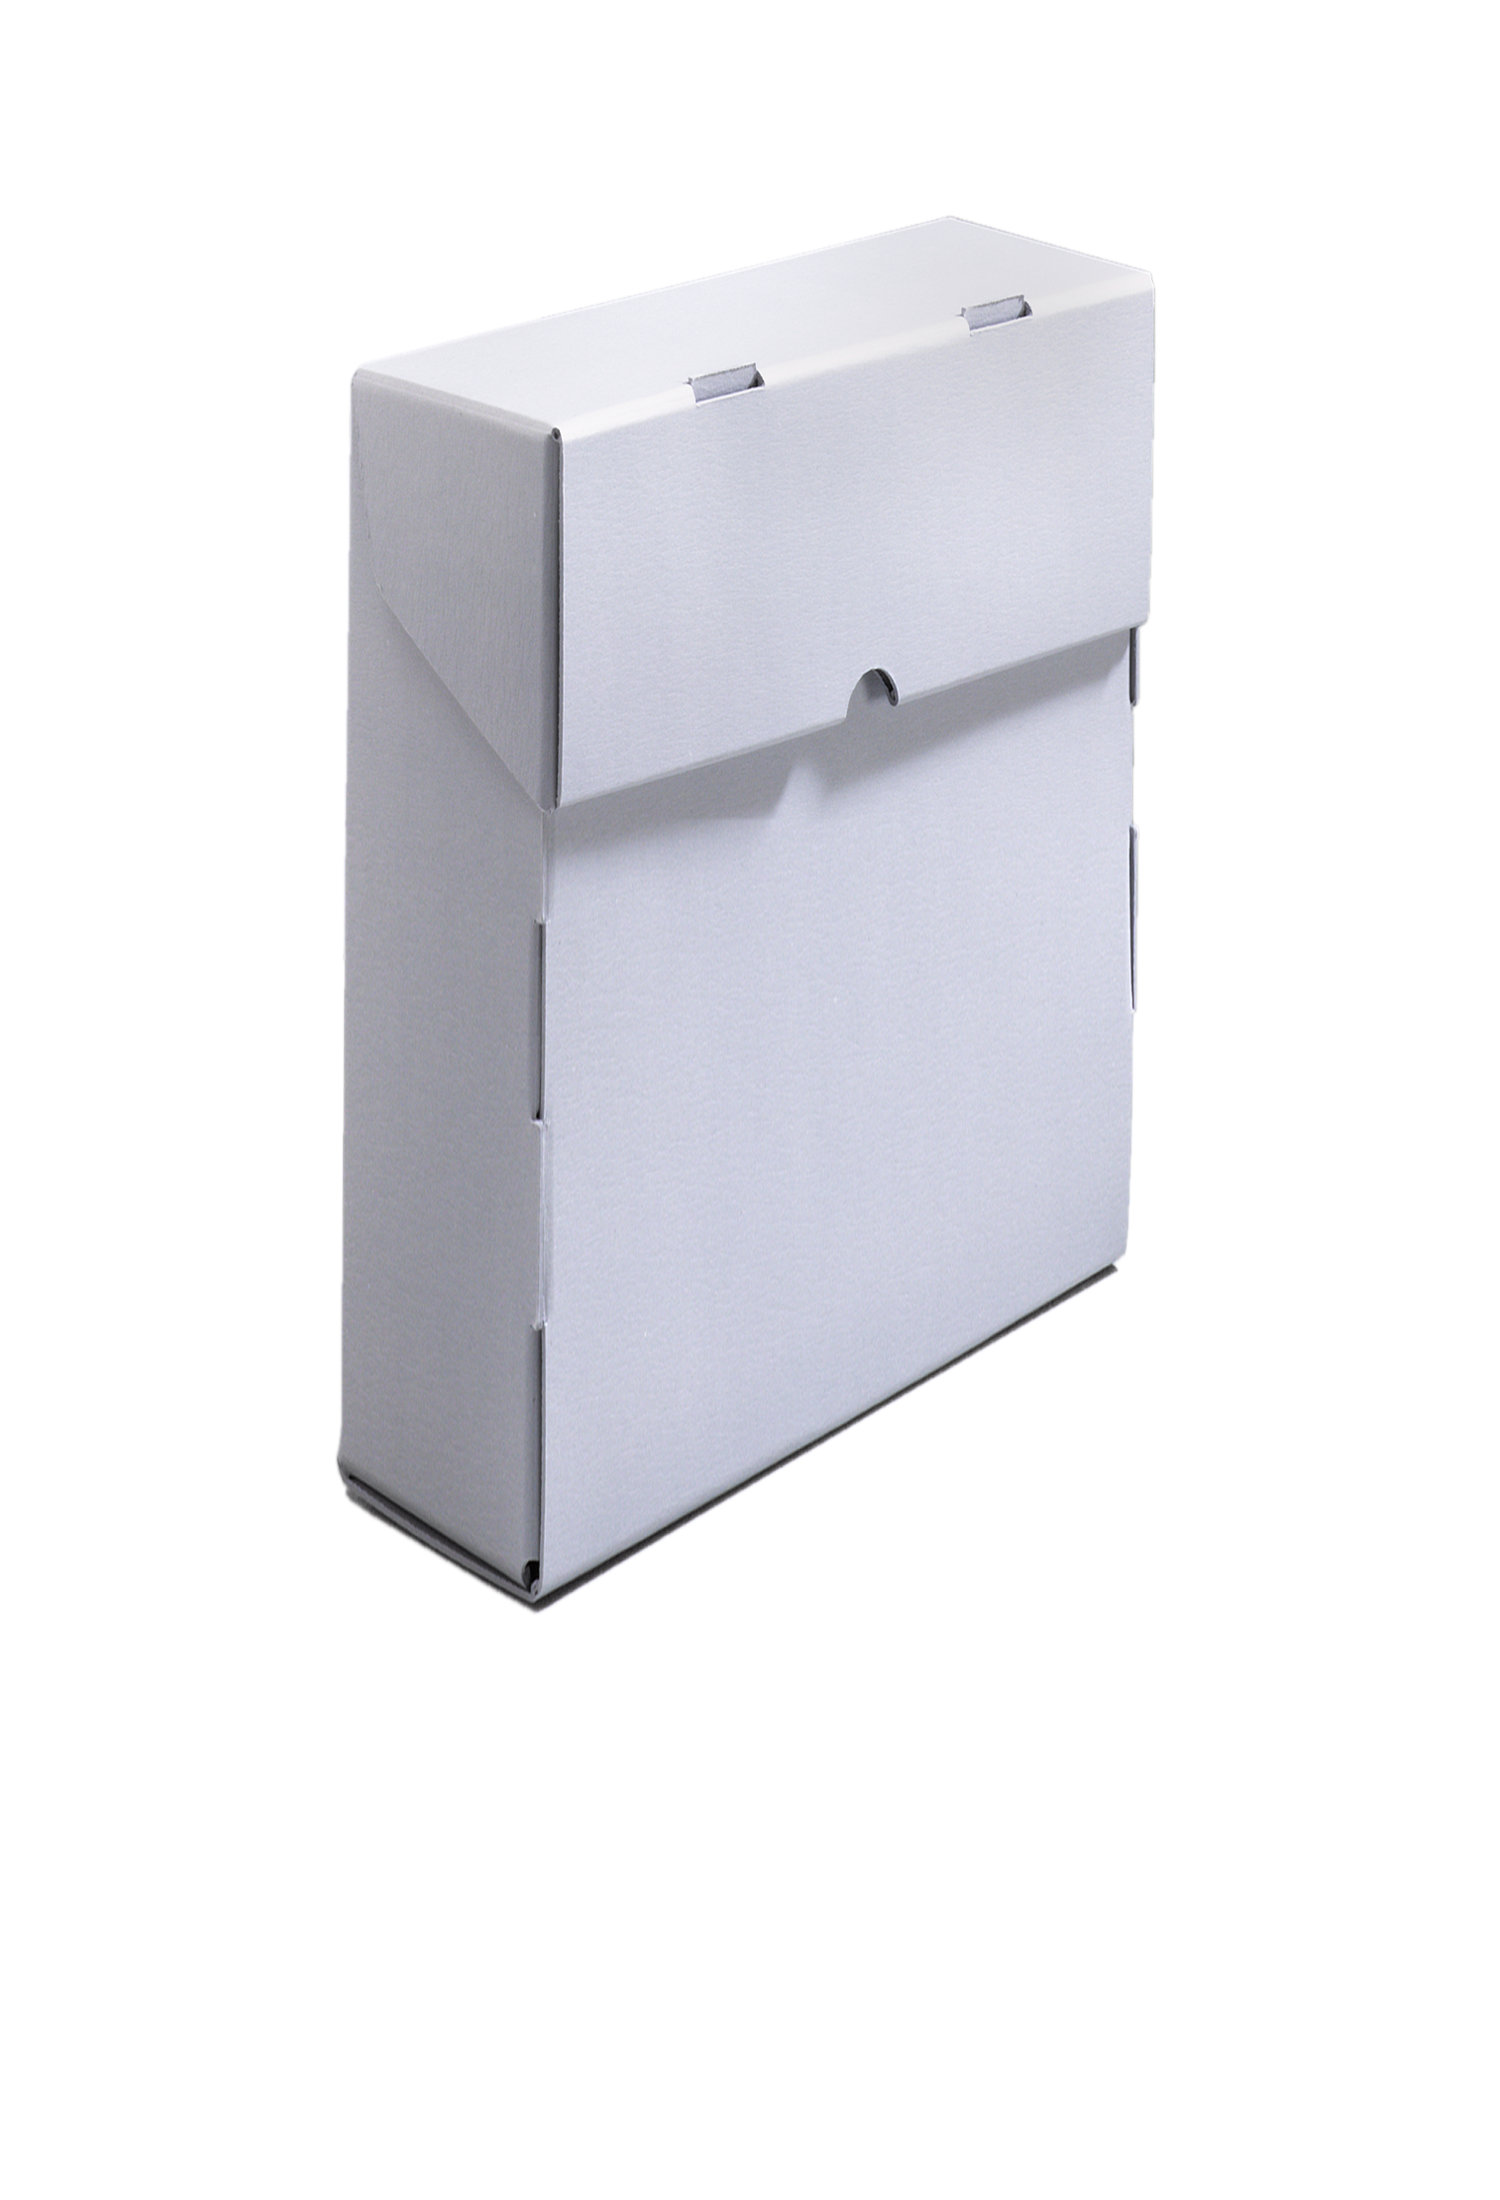  Storage box "Scala" - DIN A4 upright format Premium